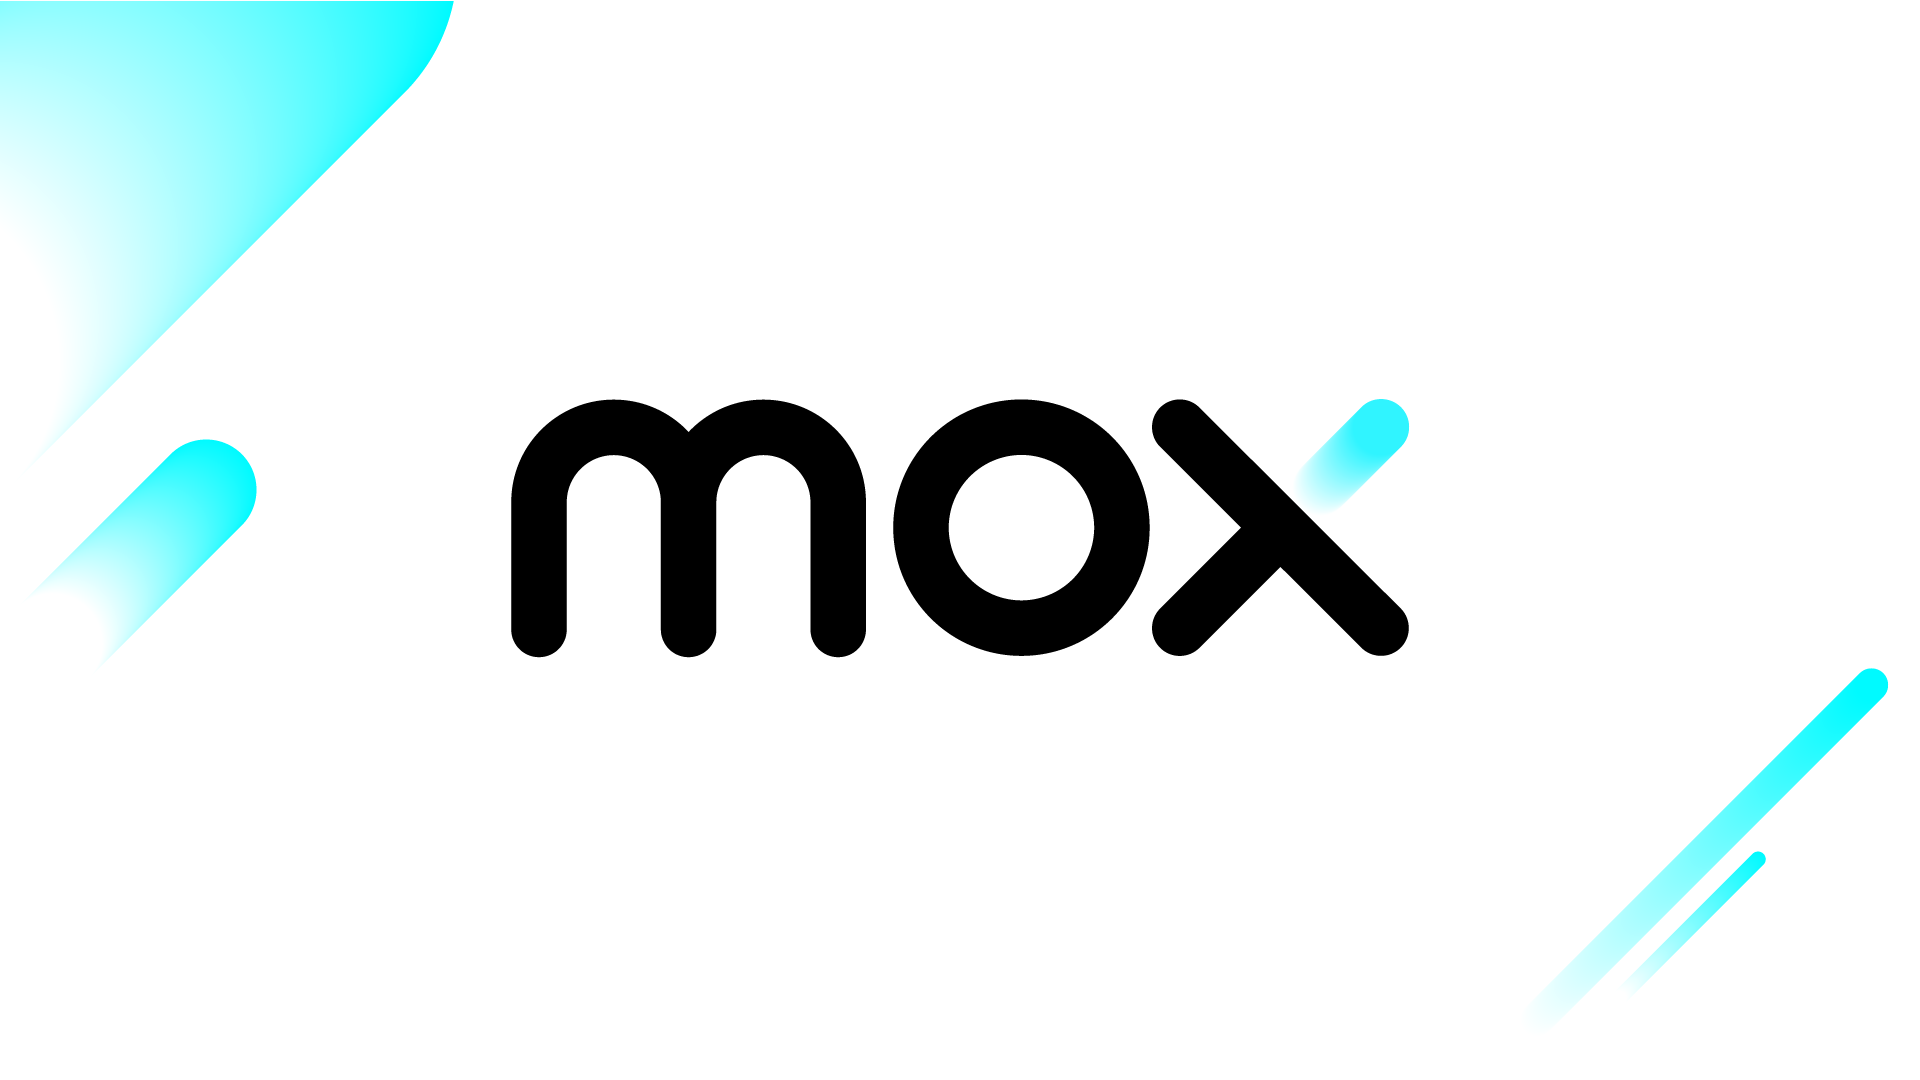 Mox Bank